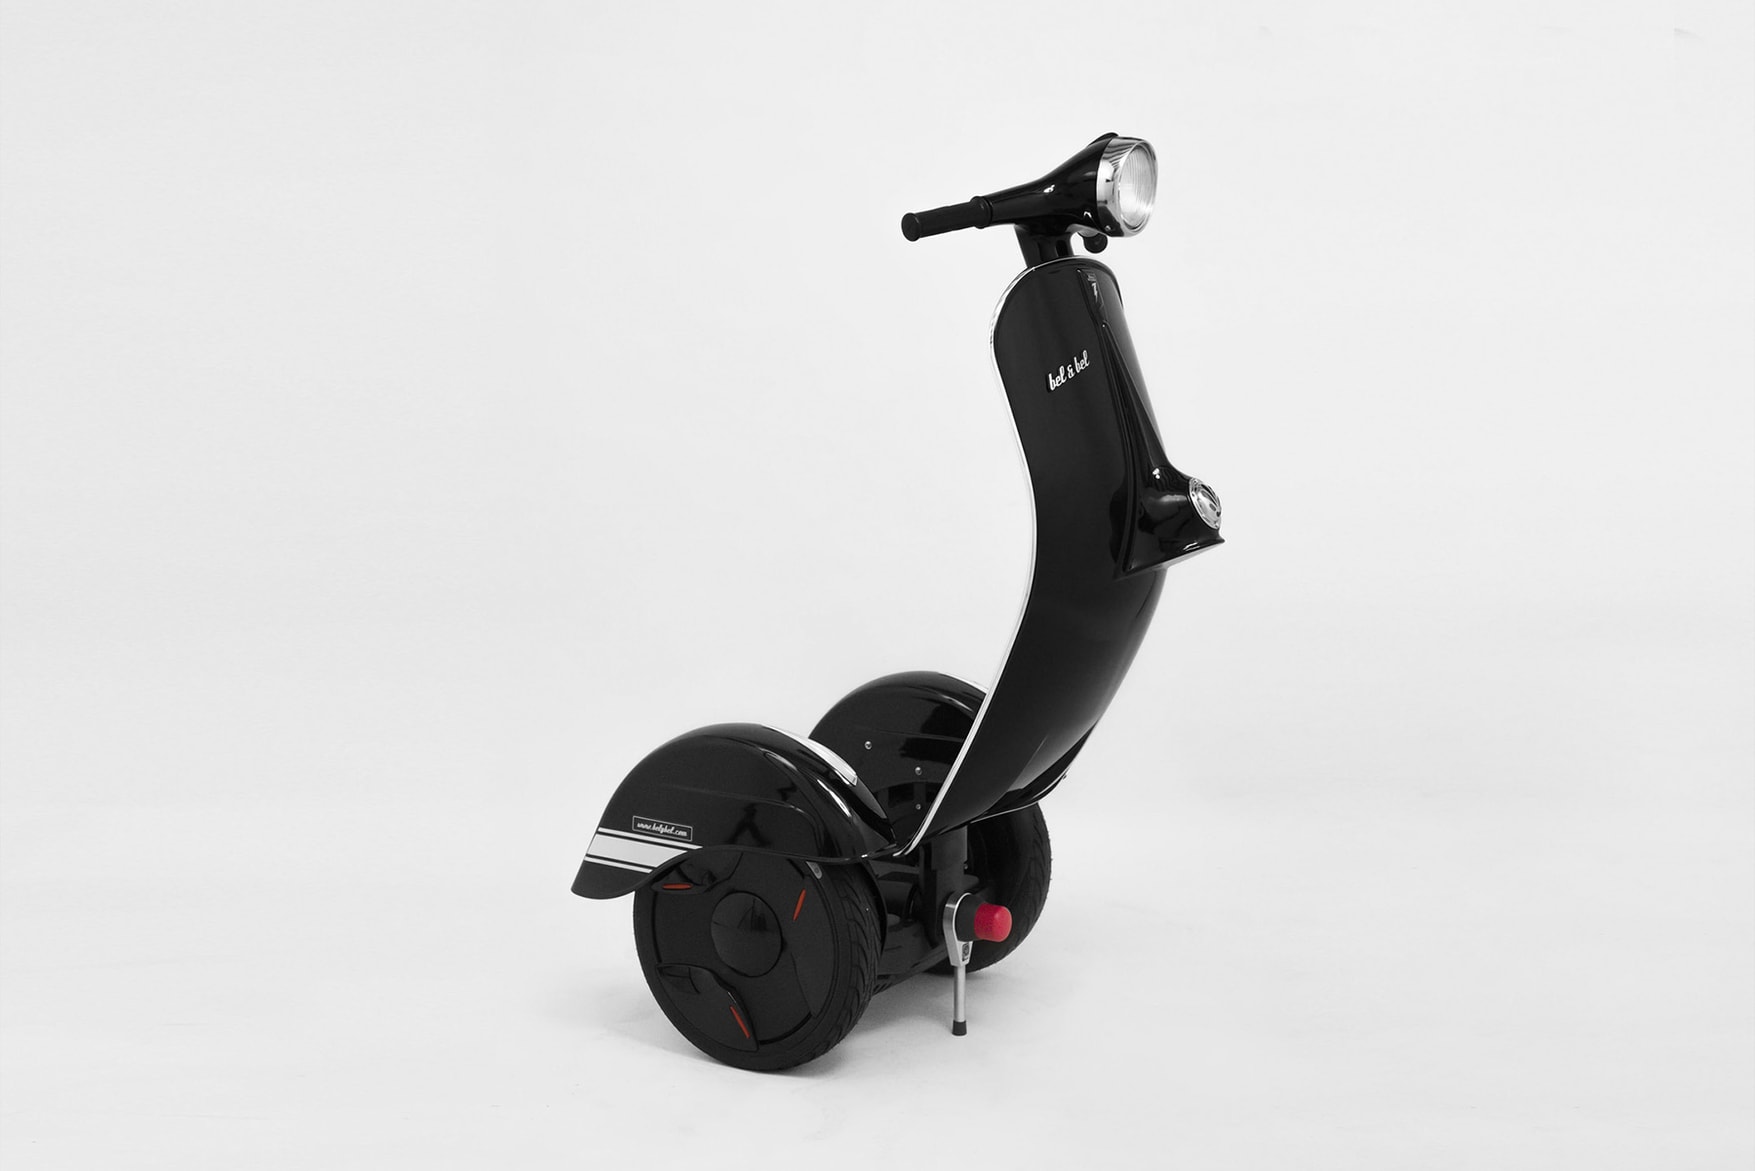 Bel & Bel Studio Vespa Scooter Segway Hybrid z-scooter autobalance EV price